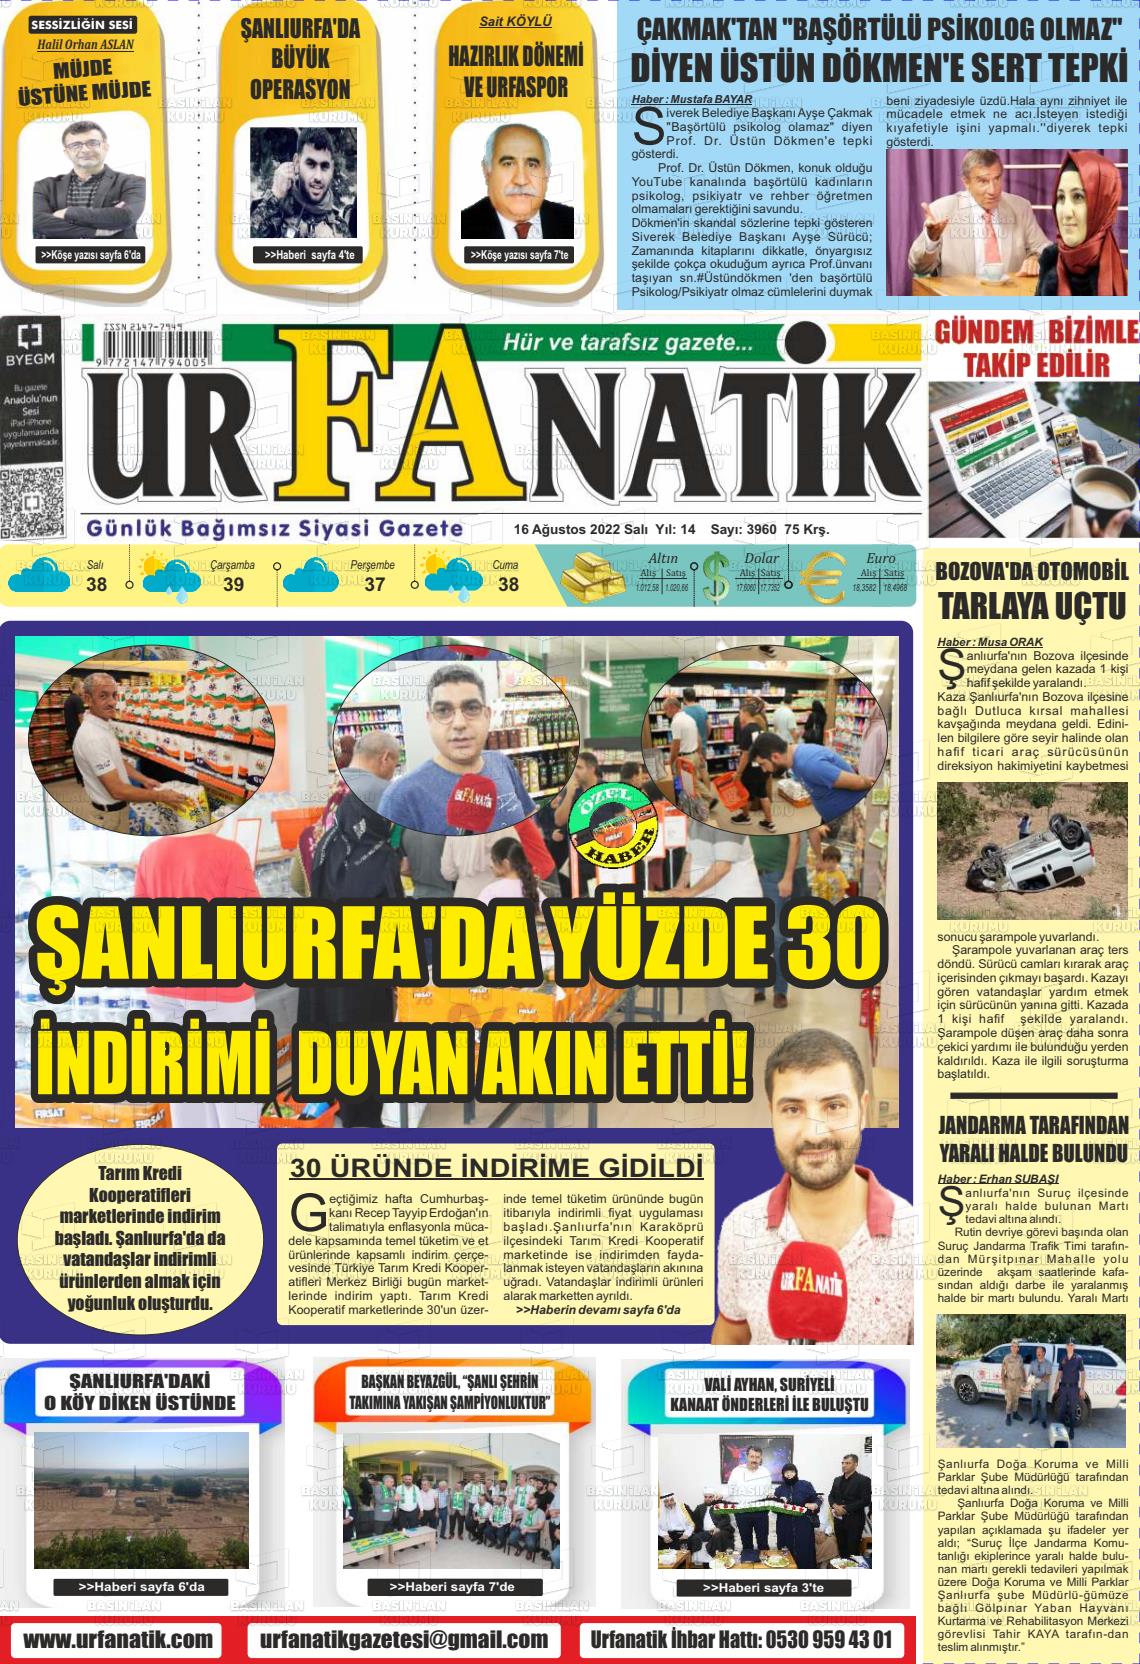 16 Ağustos 2022 Urfanatik Gazete Manşeti